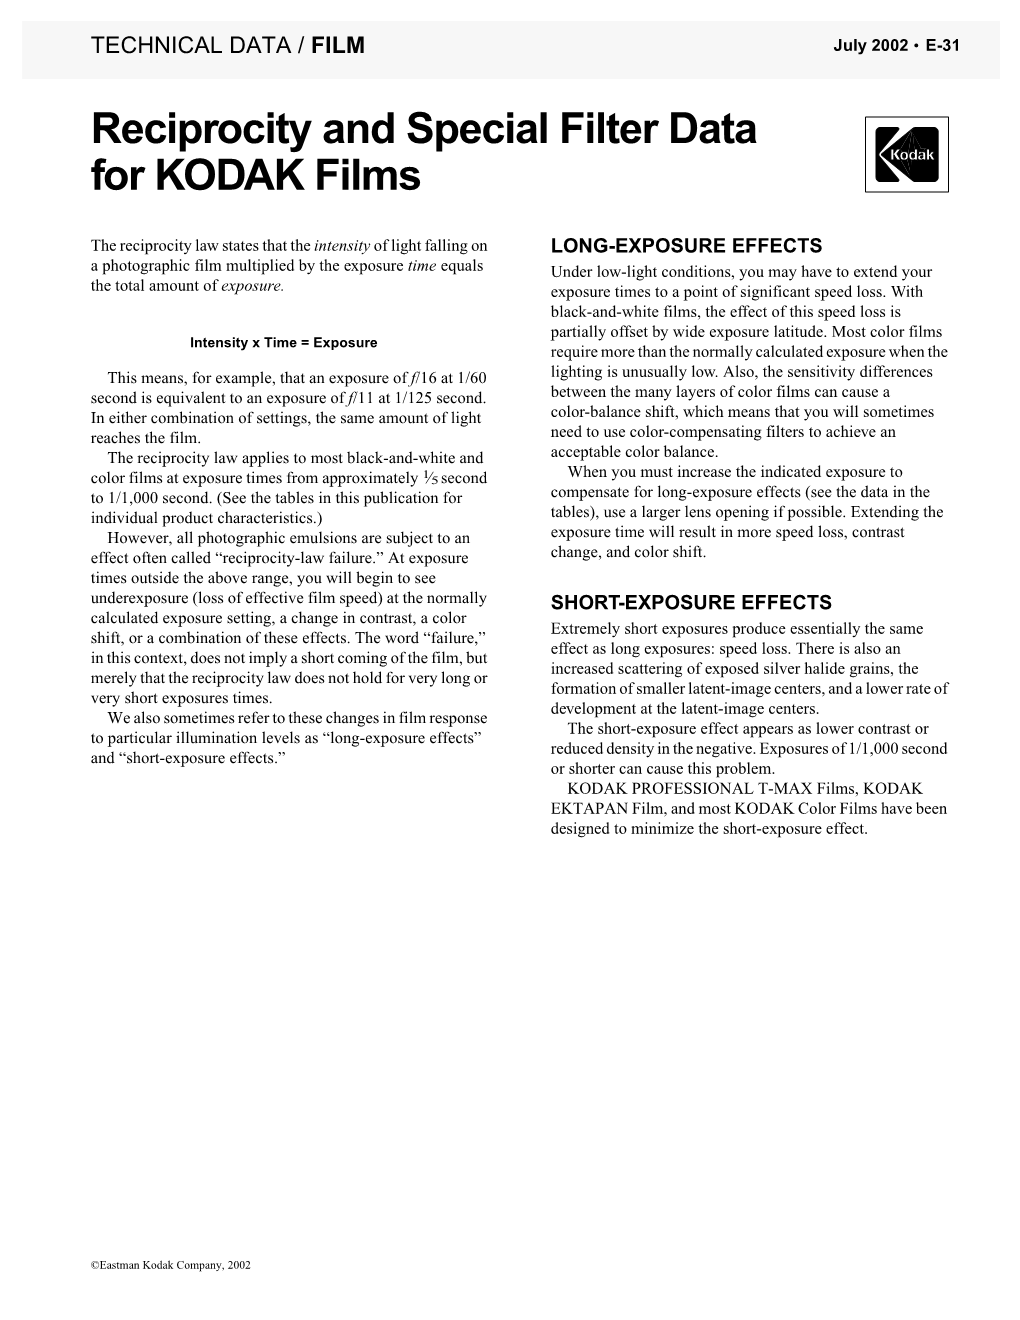 Reciprocity and Special Filter Data for KODAK Films